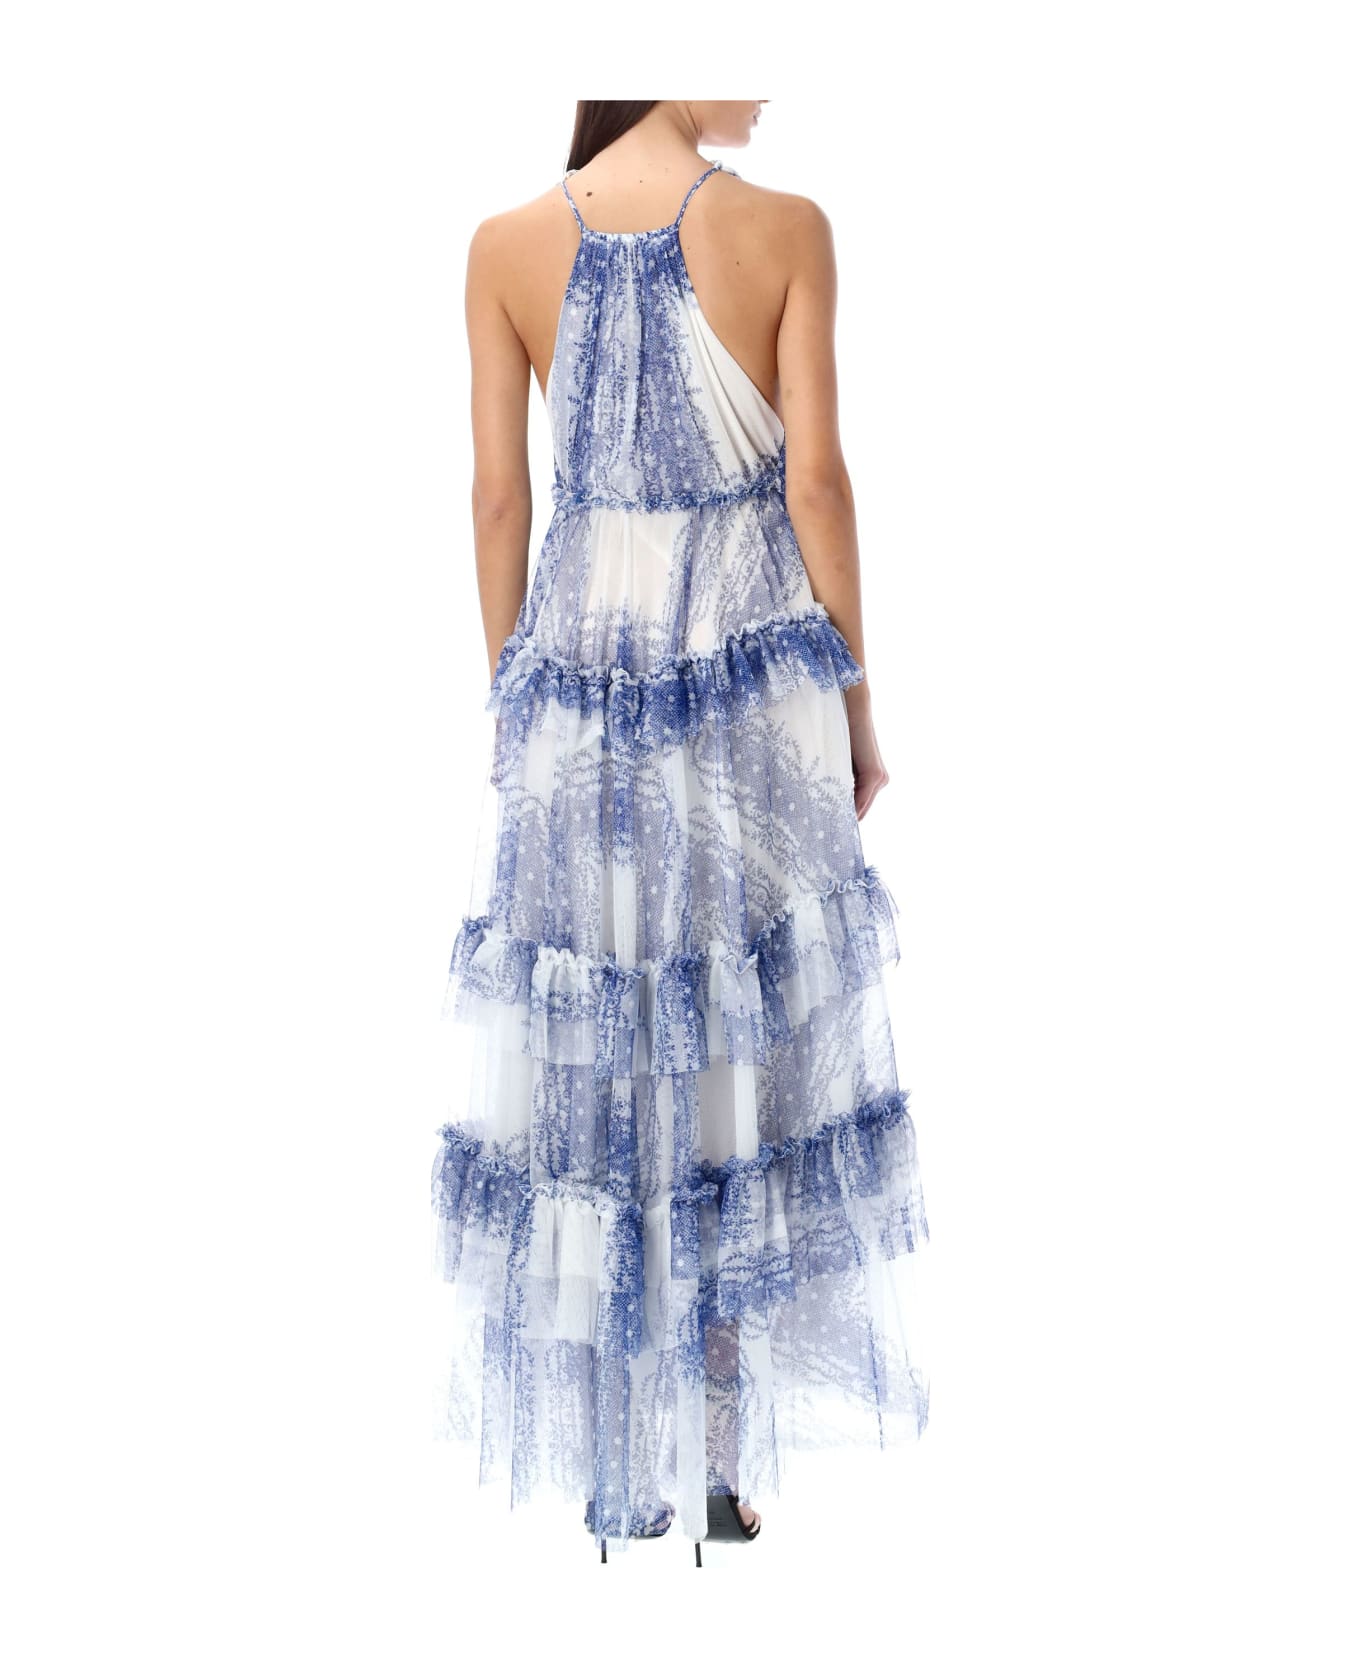 Philosophy di Lorenzo Serafini Printed Tulle Flounced Dress - WHITE BLUE PRINT